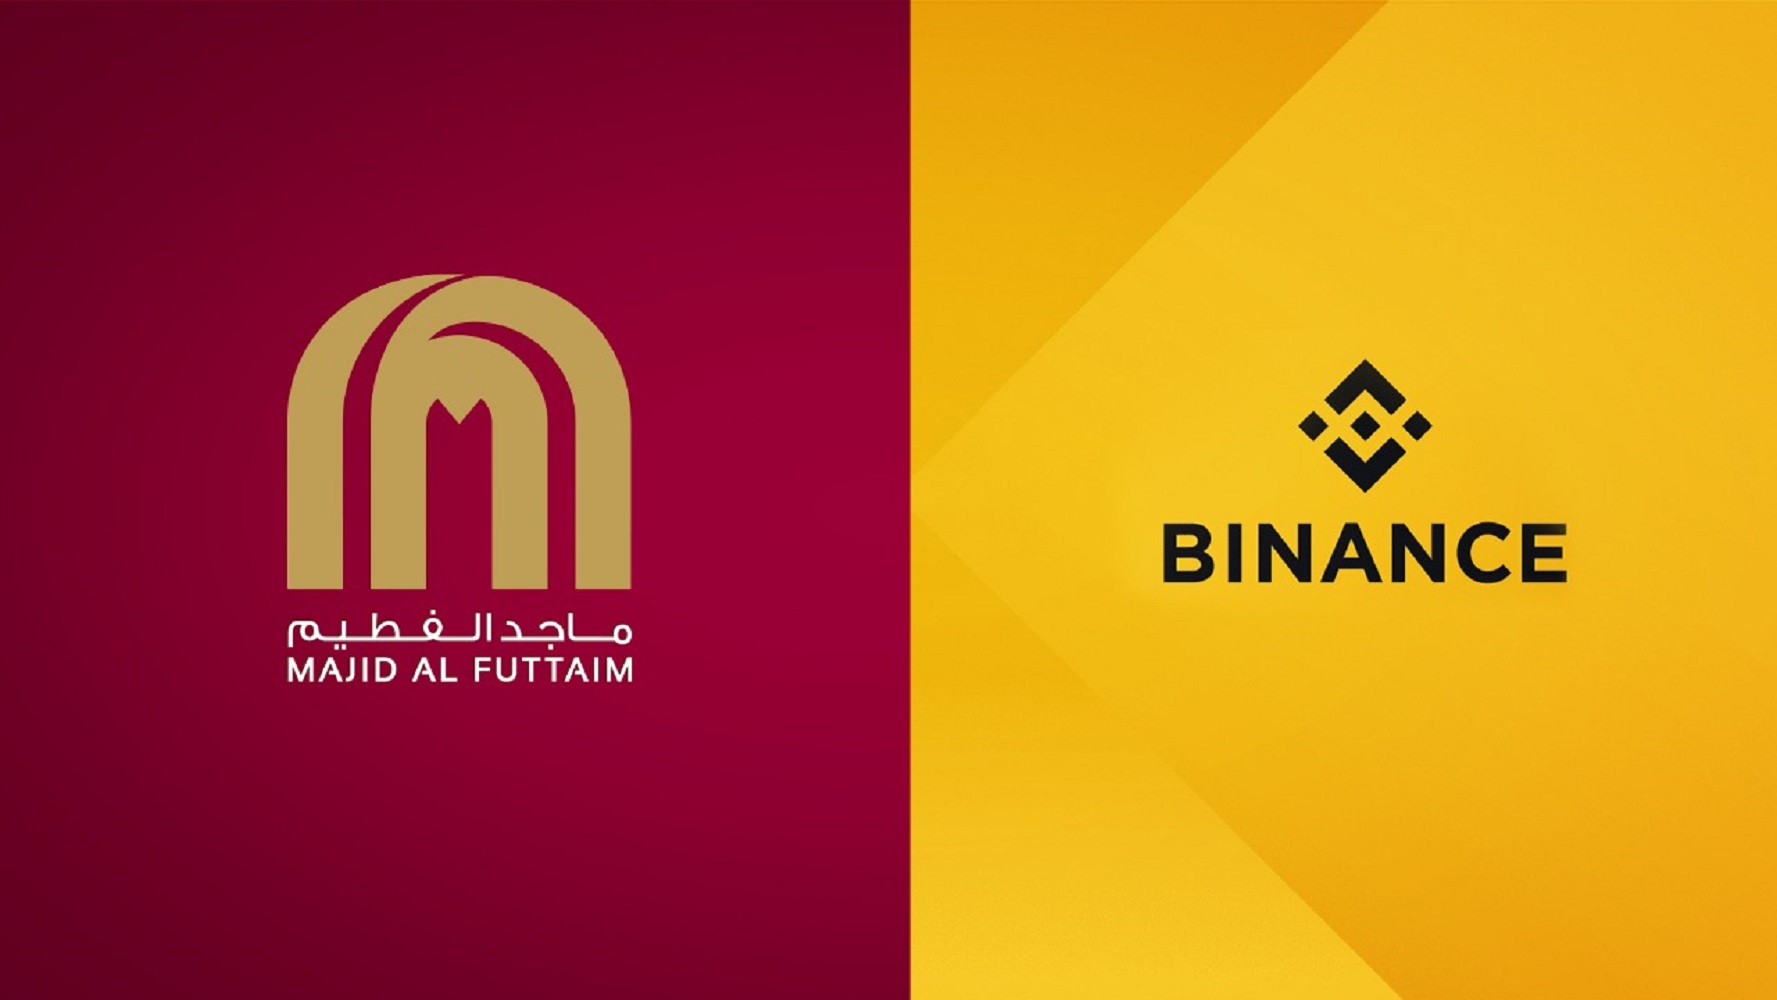 Majid Al Futtaim and Binance Announce Partnership to Unlock Web3 Capabilities for Customers